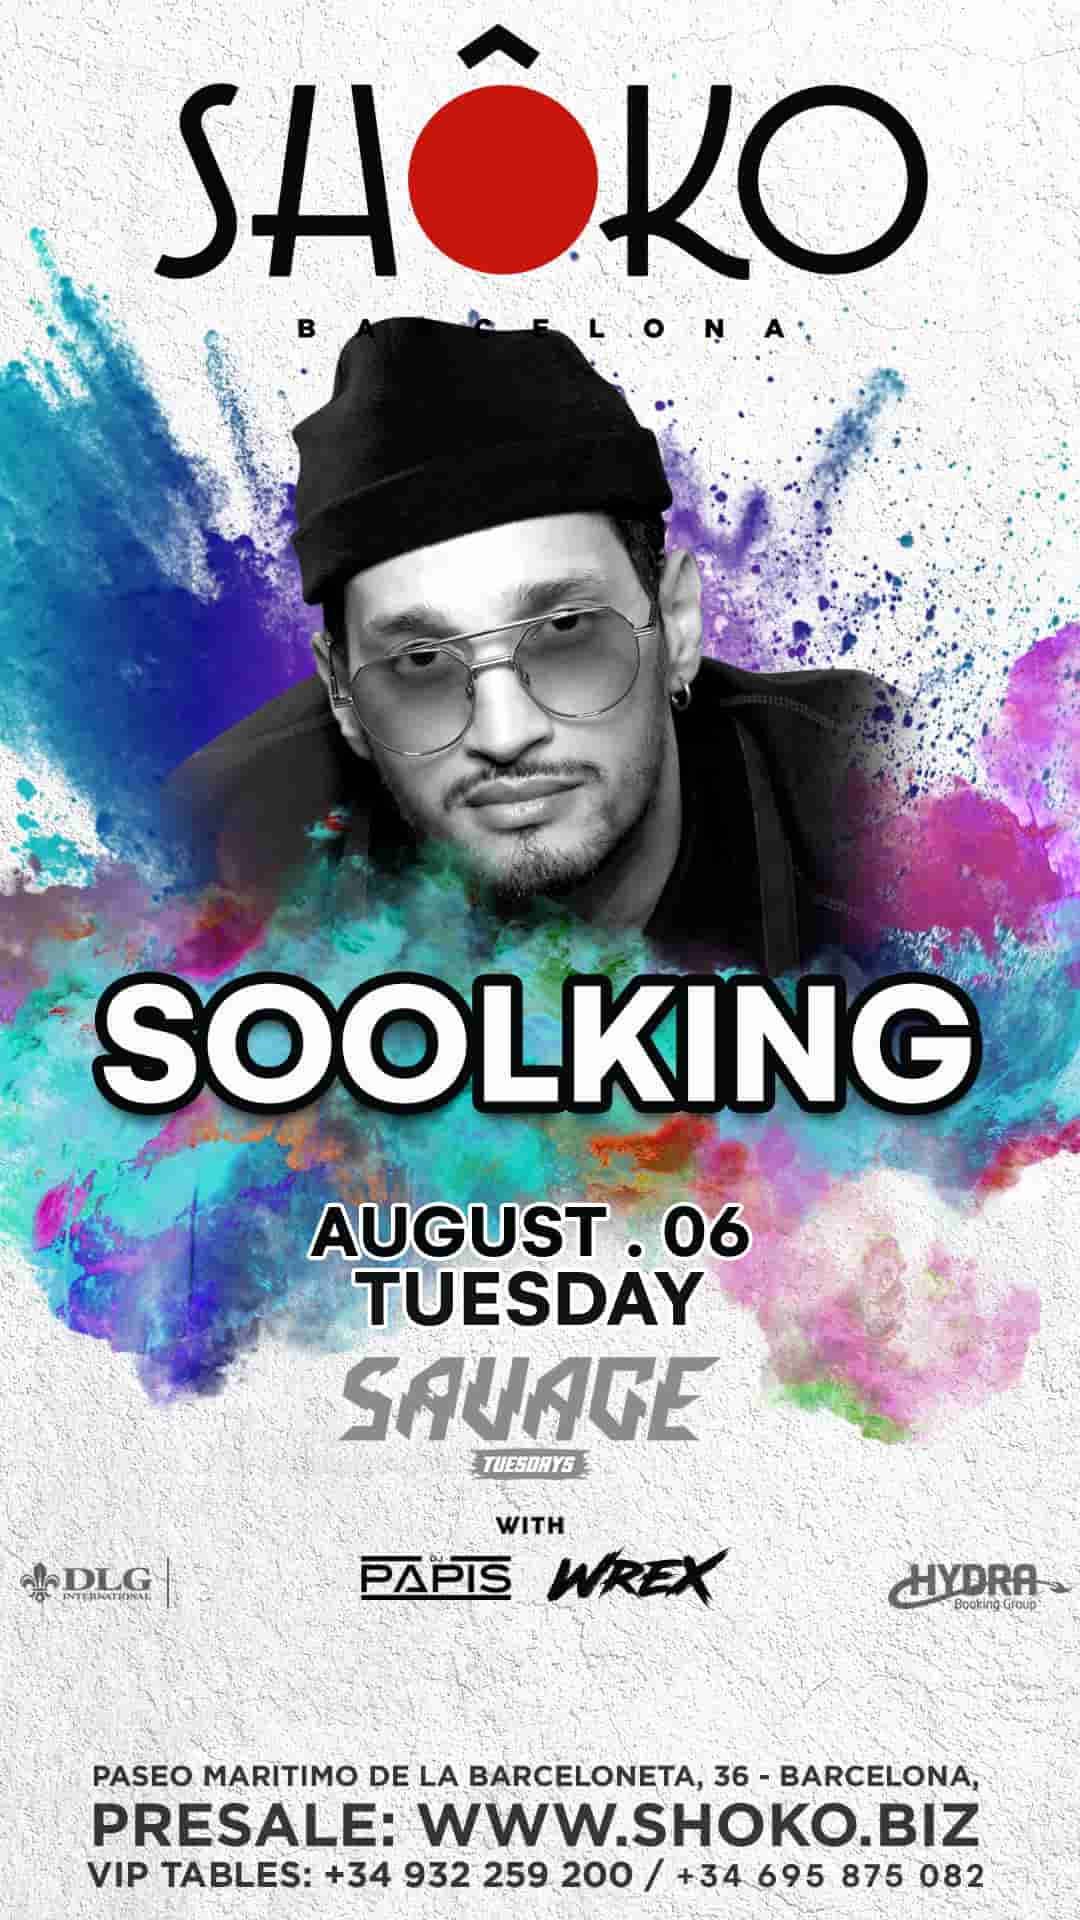 Savage | SOOLKING in concert